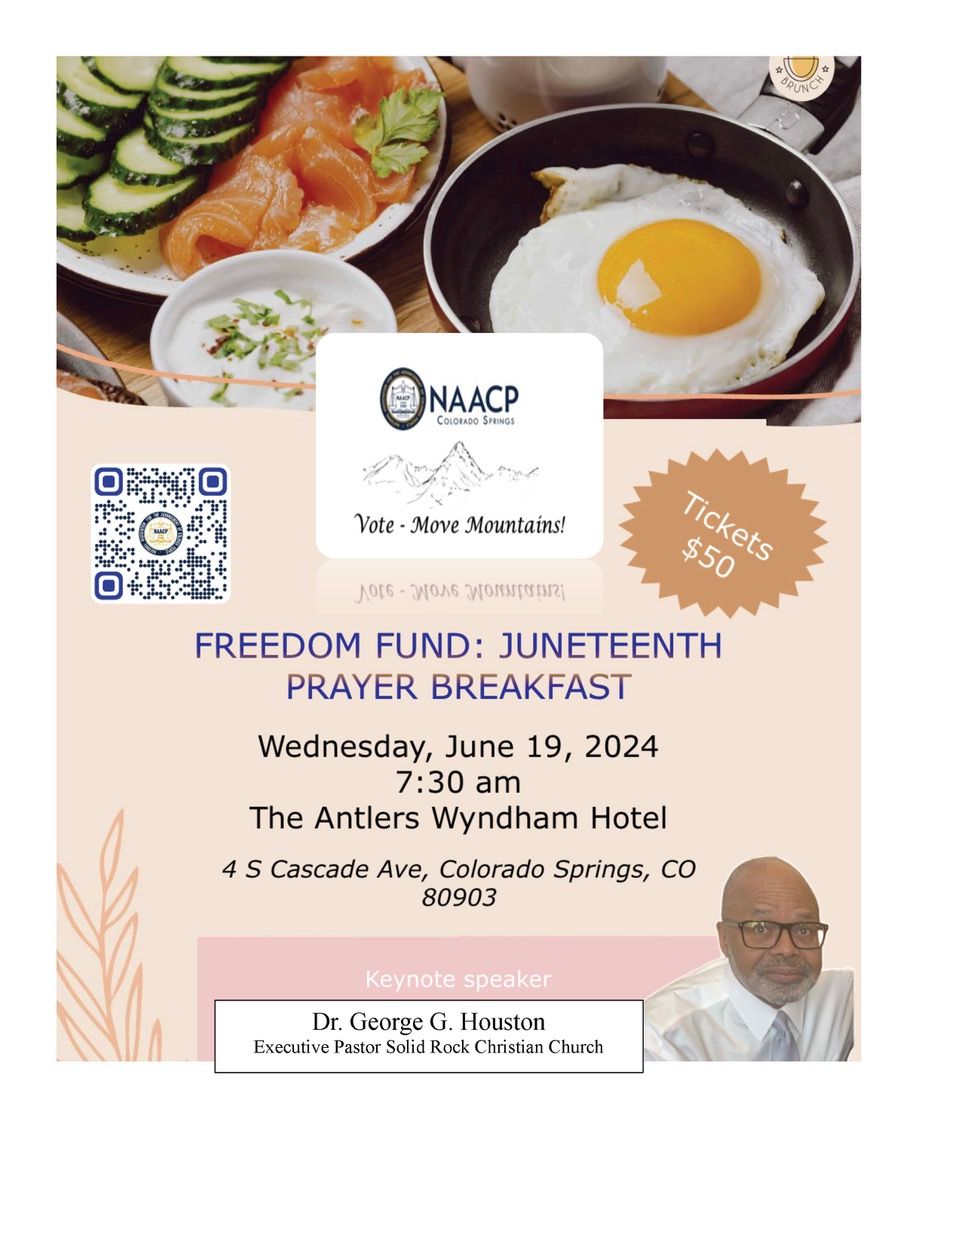 Freedom Fund: Juneteenth Prayer Breakfast